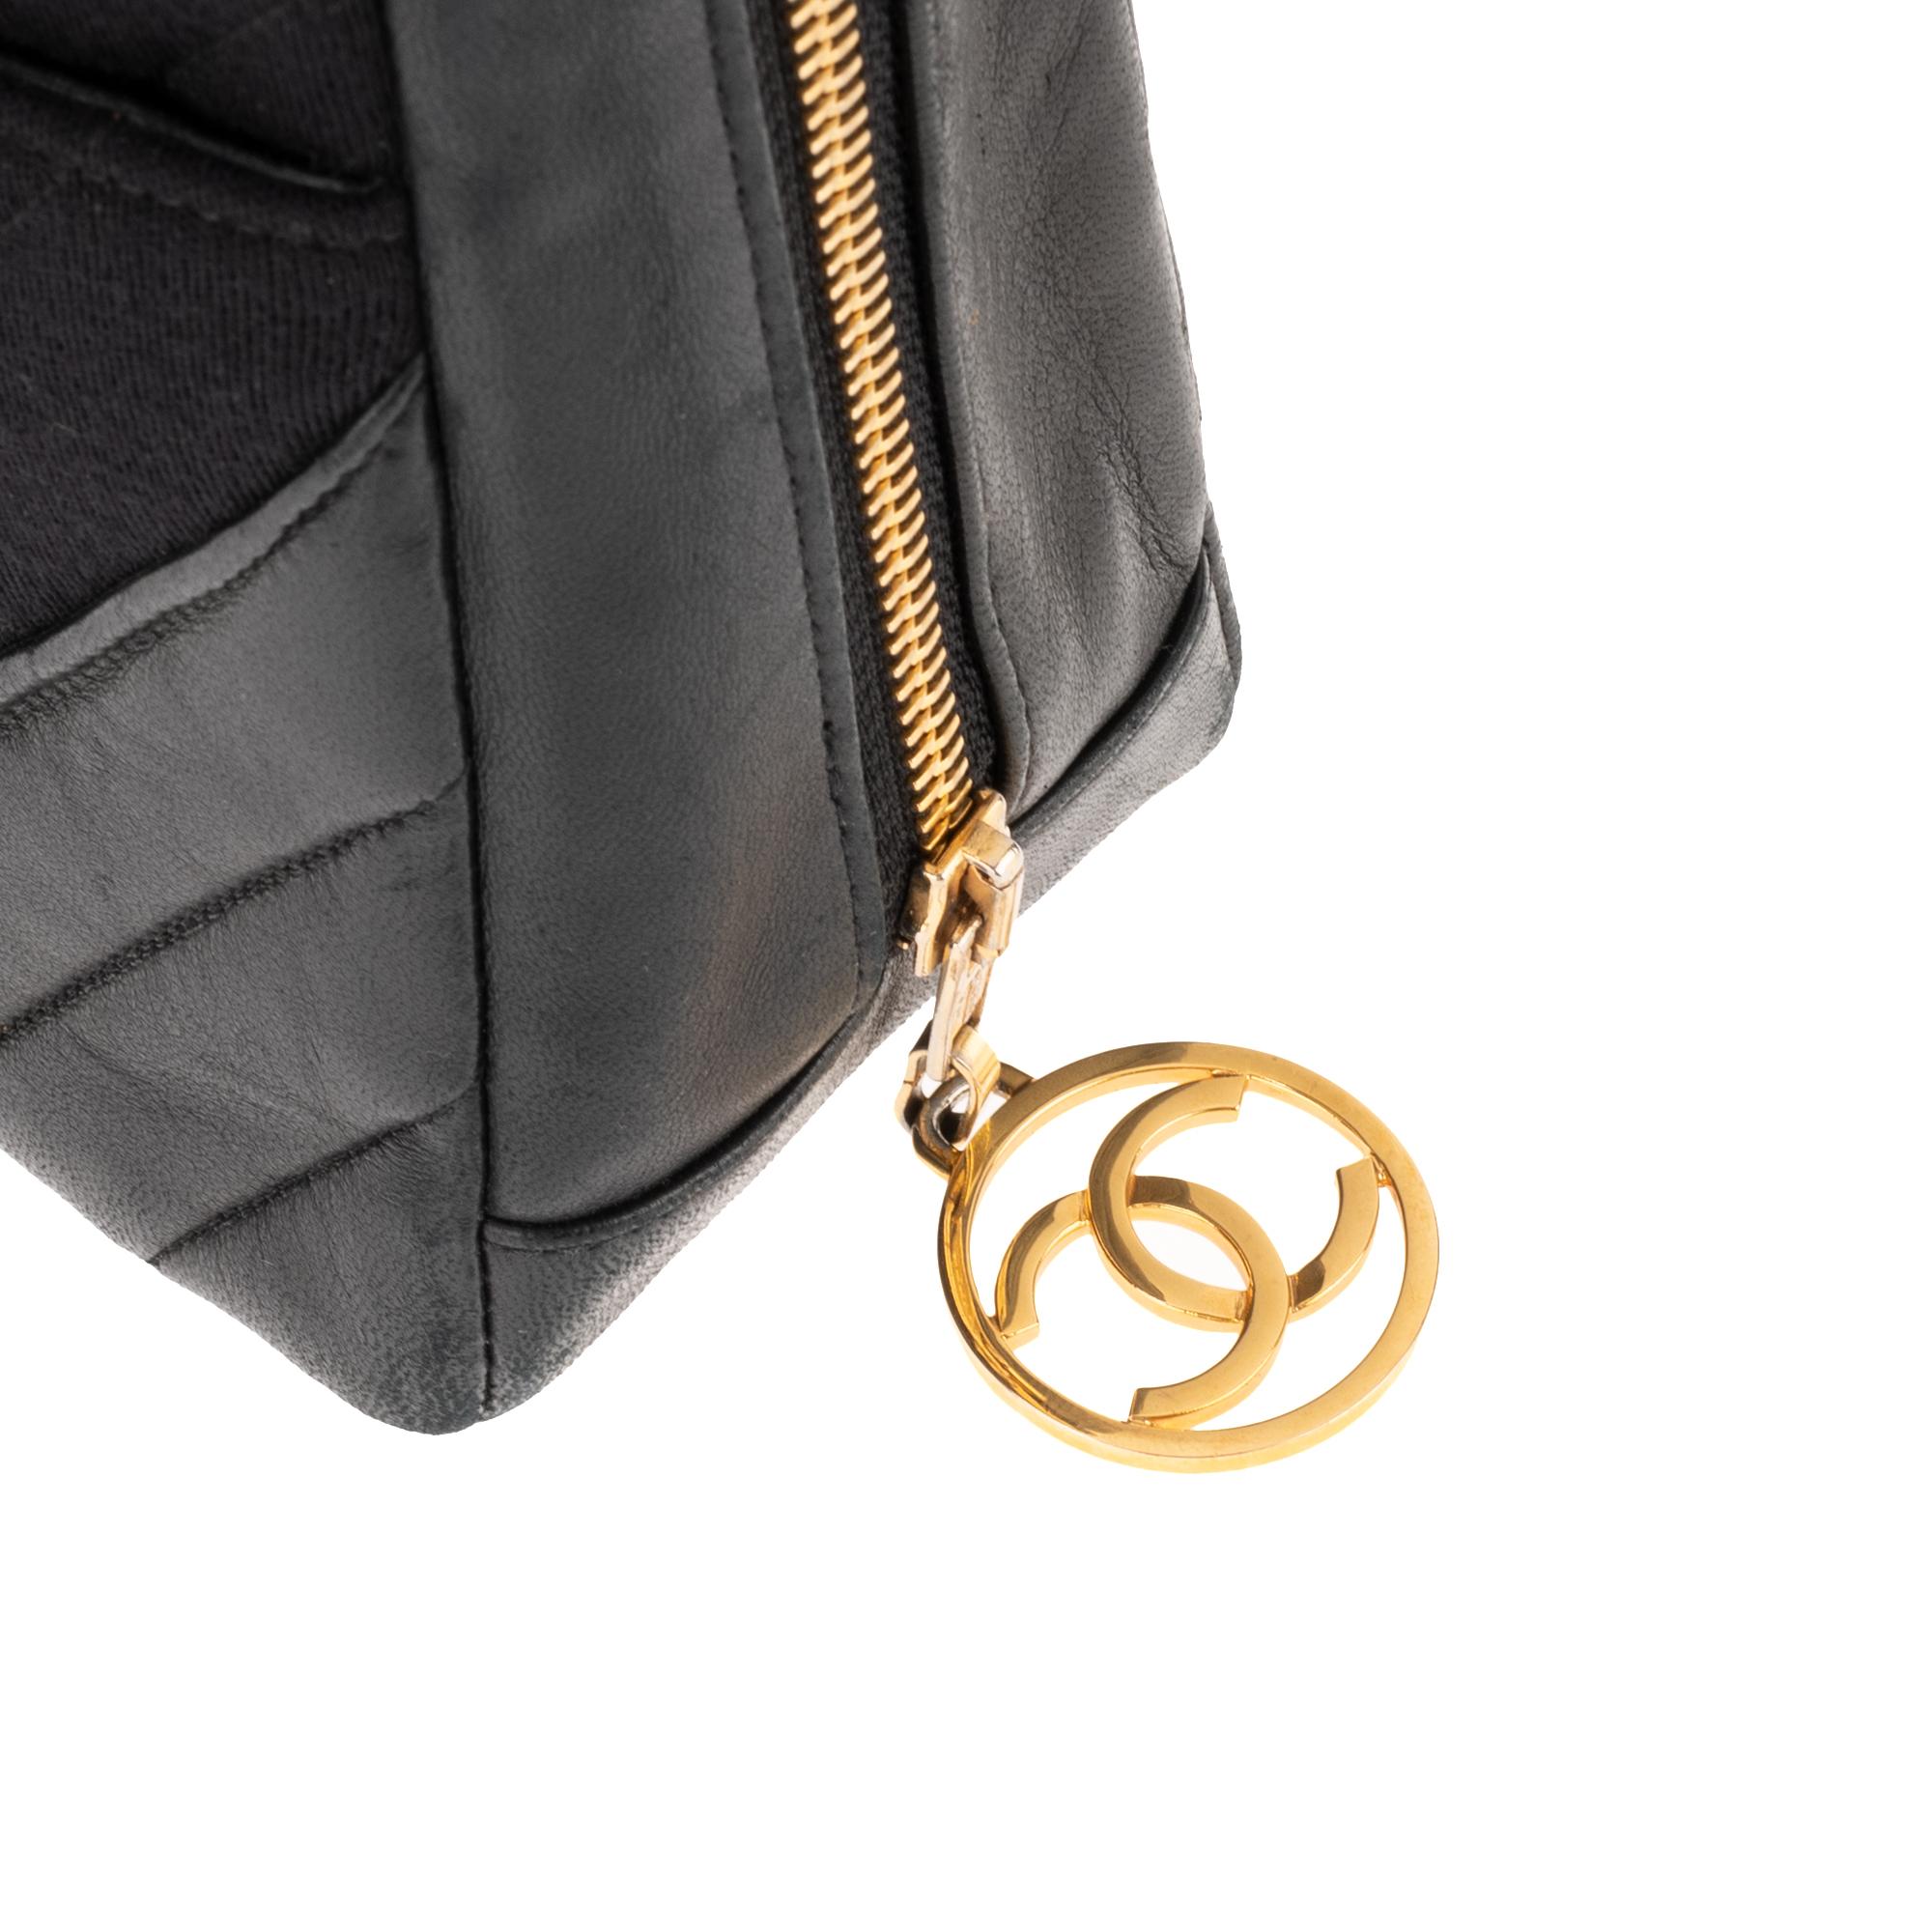 Black Chanel bi-material shoulder bag in navy blue jersey and leather, Gold hardware